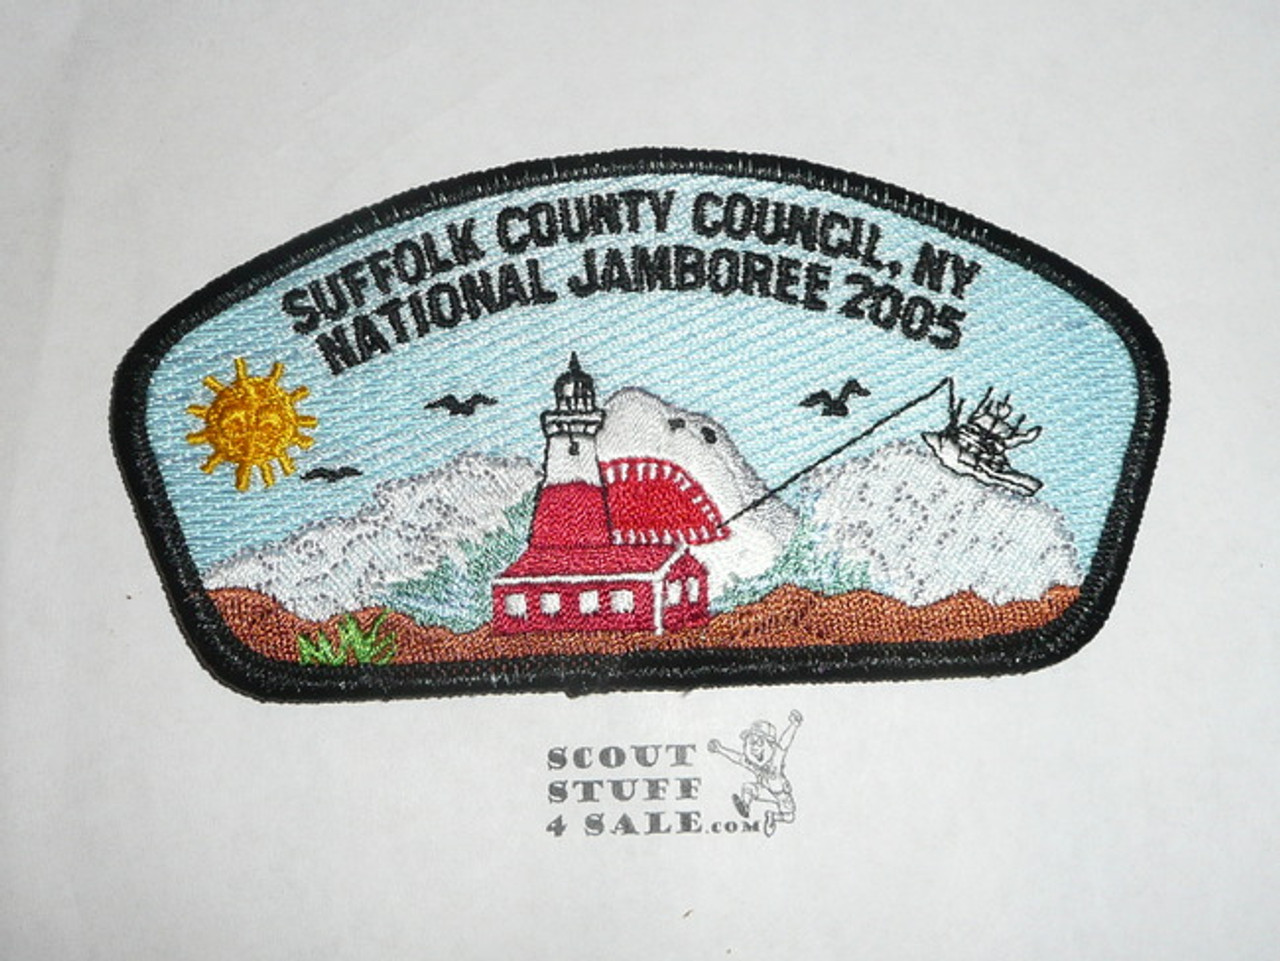 2005 National Jamboree JSP - Suffolk County Council